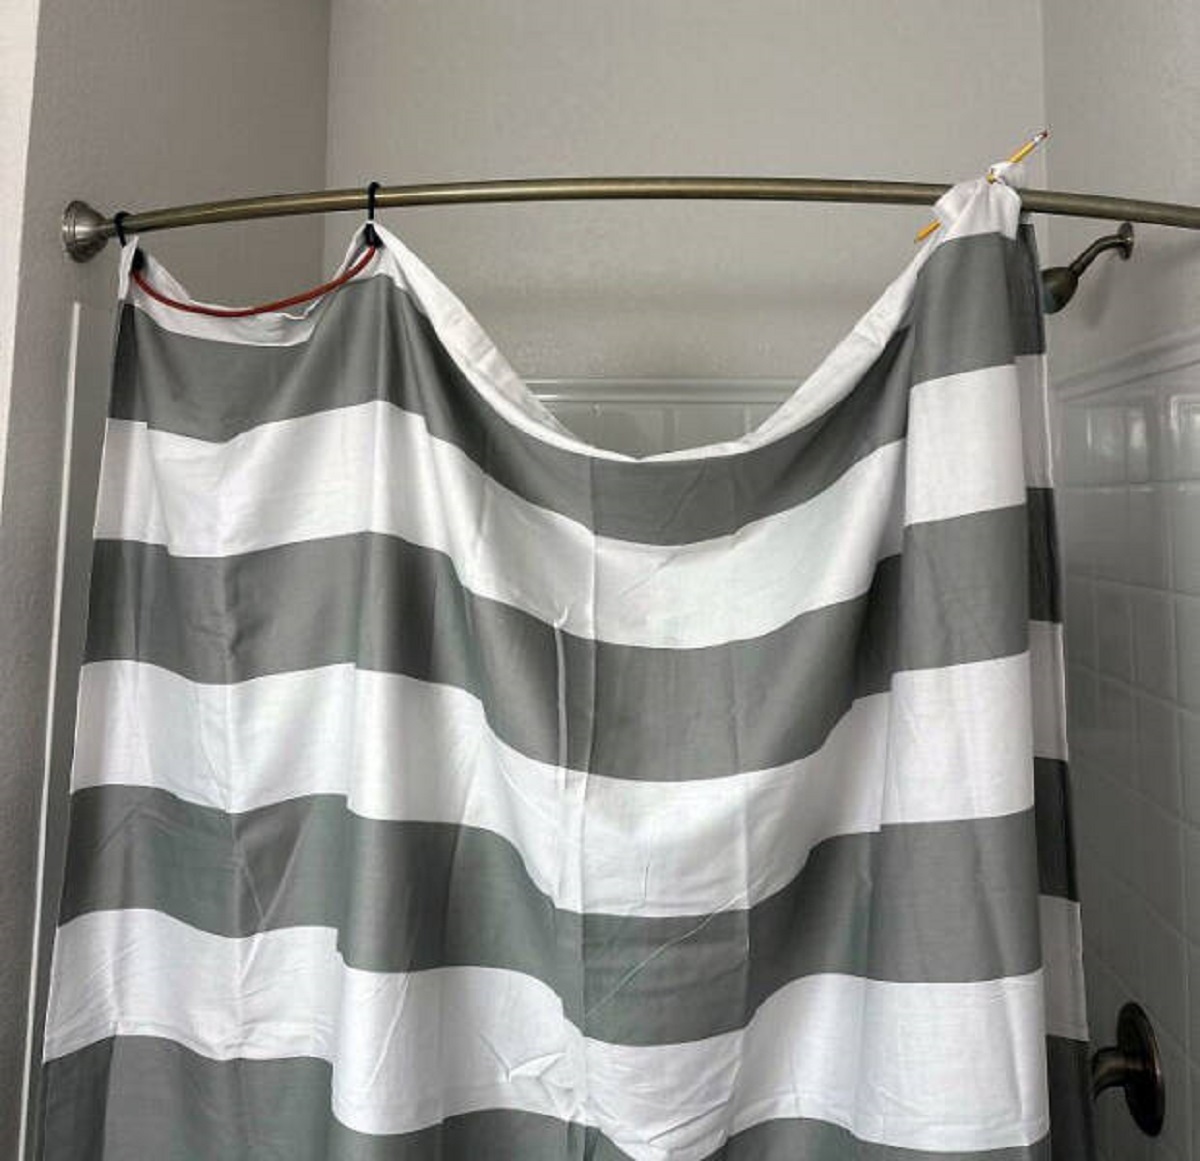 "My Boyfriend Forgot To Buy Shower Curtain Rings"